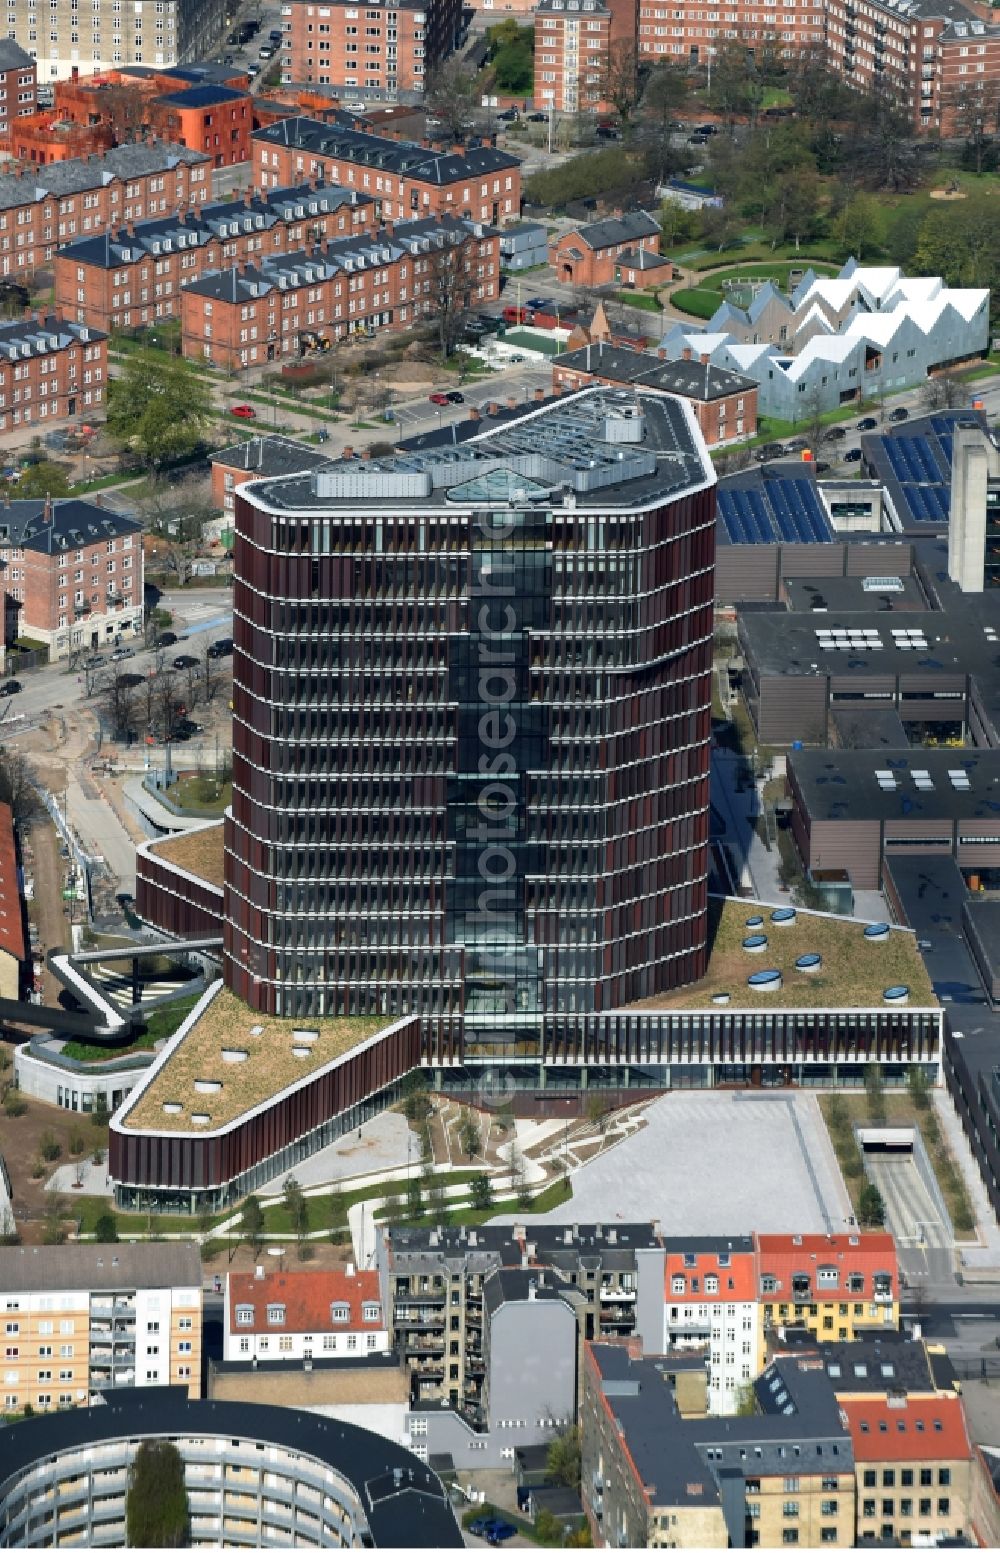 Aerial image Kopenhagen - High-rise building of the university Kobenhavns Universitet Panum in Copenhagen in Region Hovedstaden, Denmark